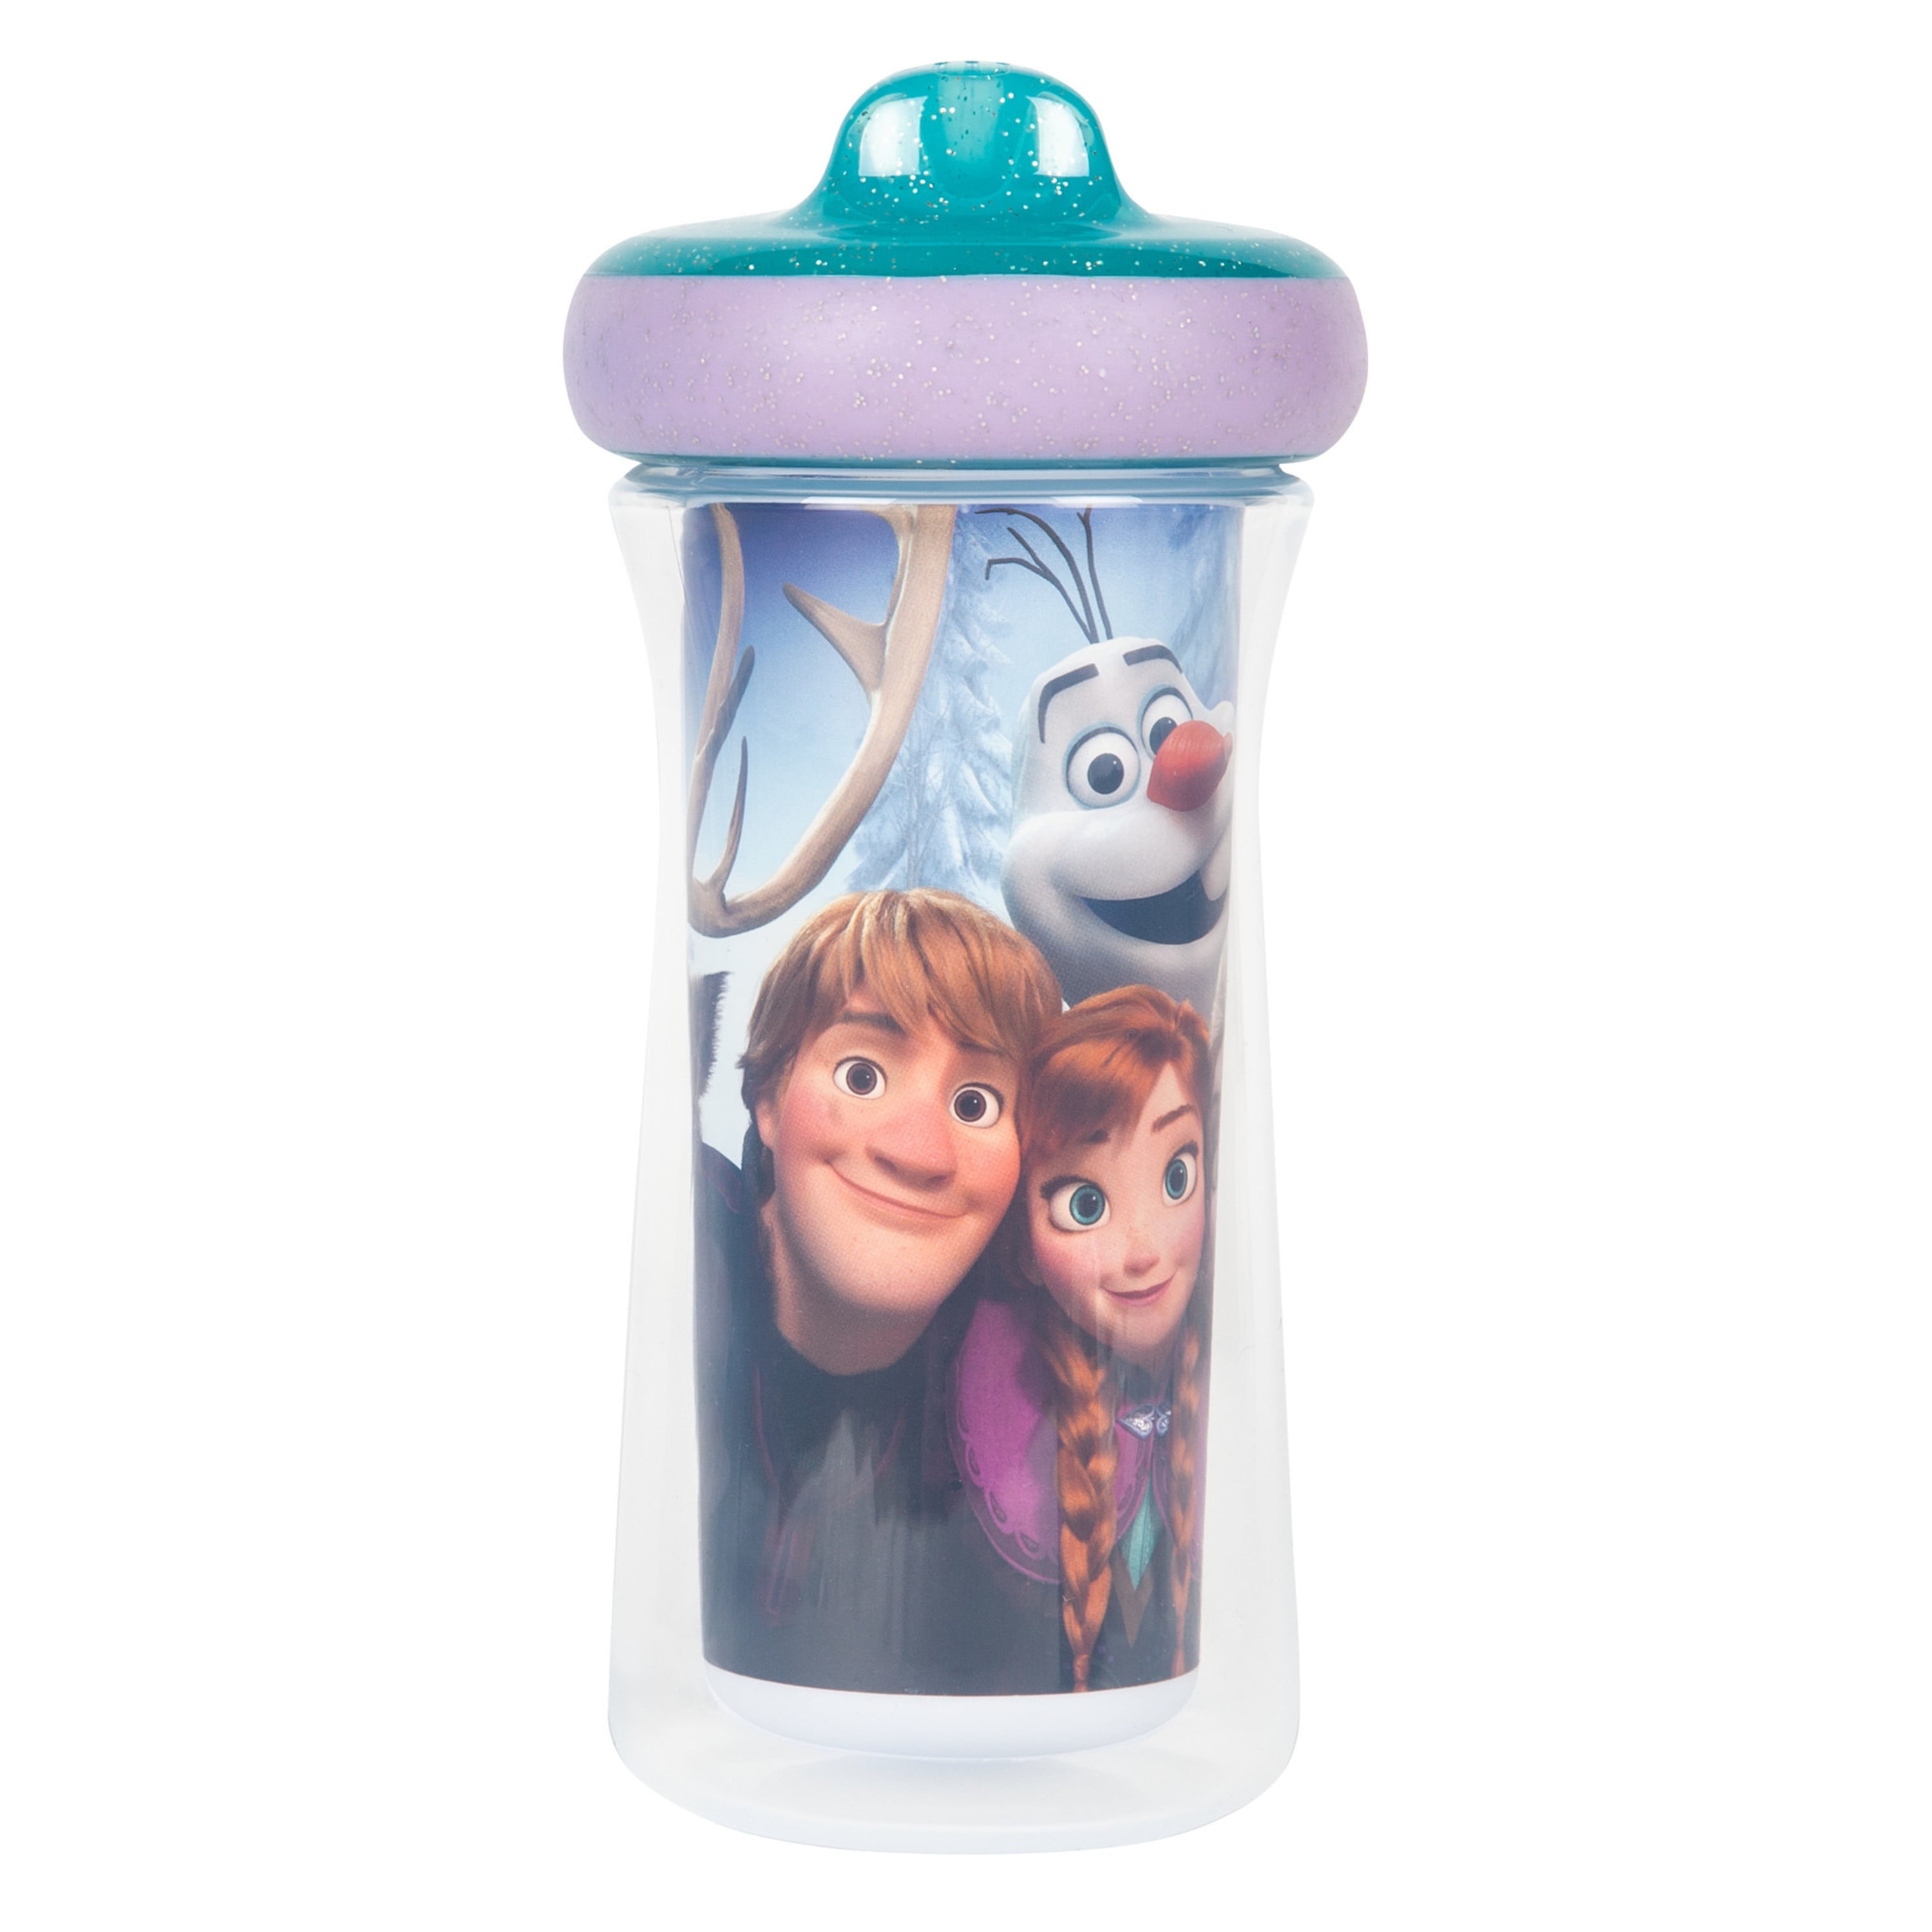 Disney Frozen Insulated Sippy Cups 9oz BPA Free Leak Proof Drop